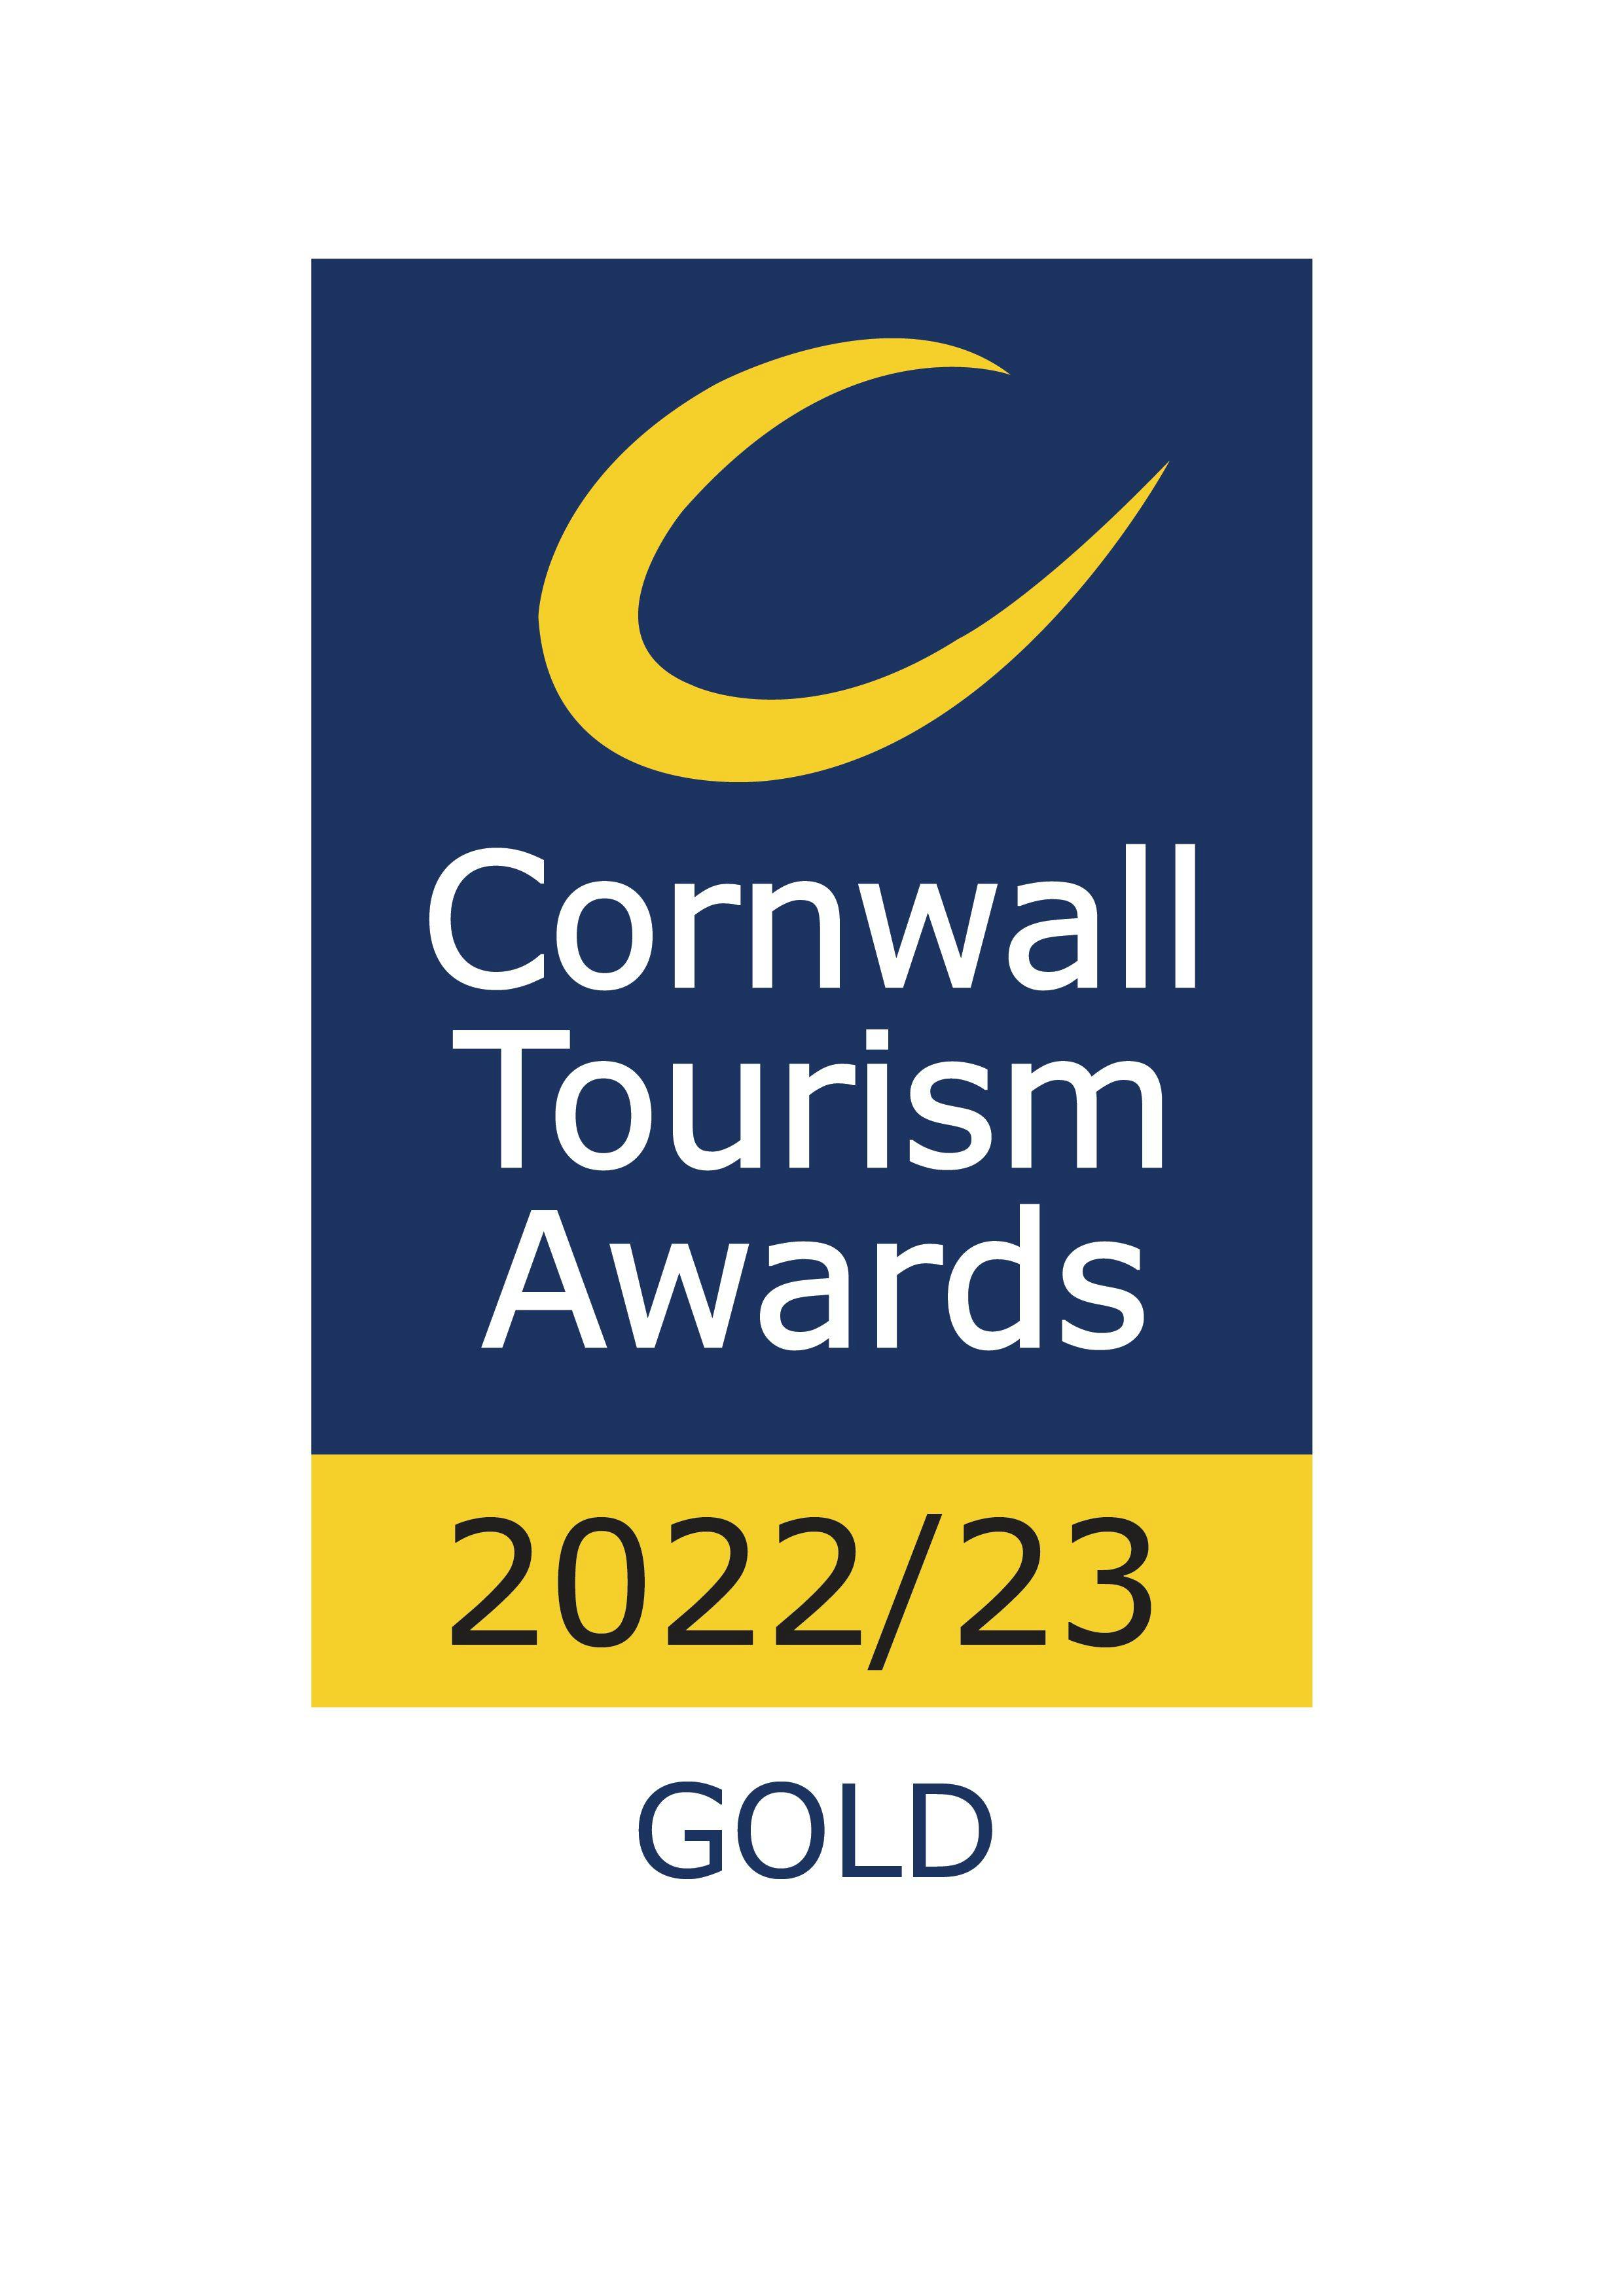 Cornwall Tourism Awards Gold 2022/2023